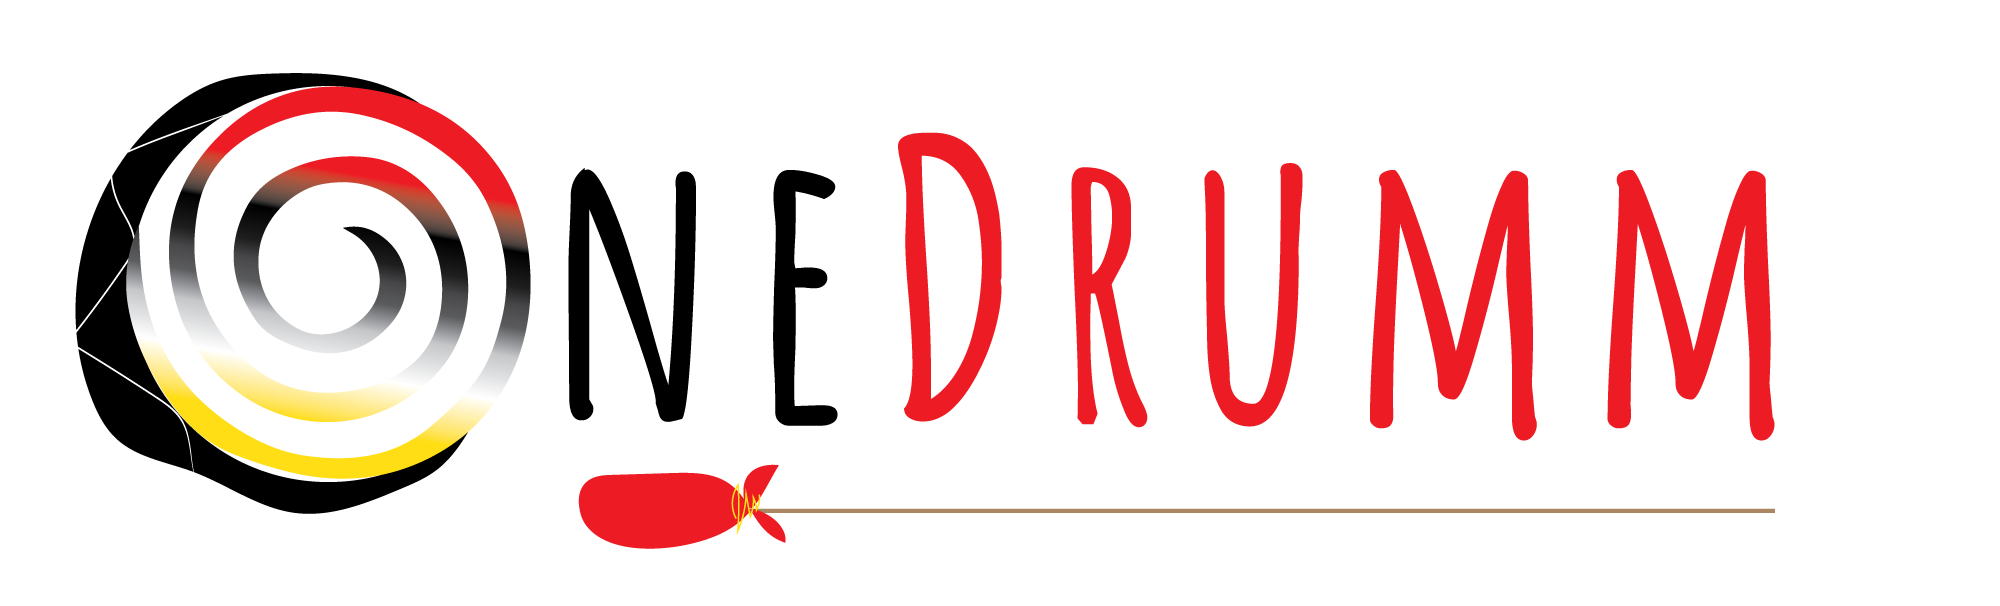 OneDrumm logo